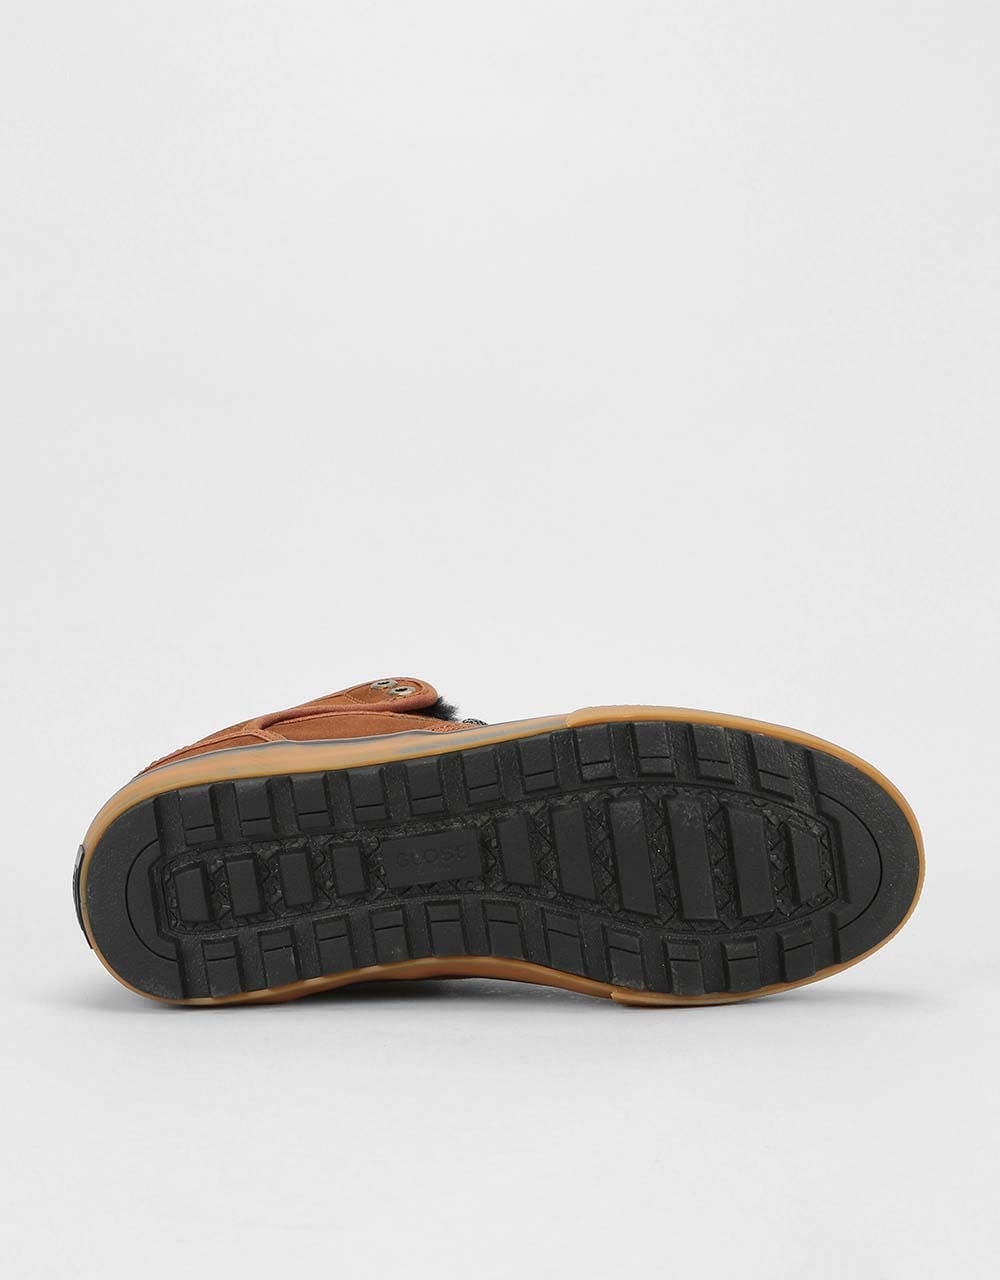 Globe Motley Mid Skate Shoes - Partridge Brown/Gum/Fur